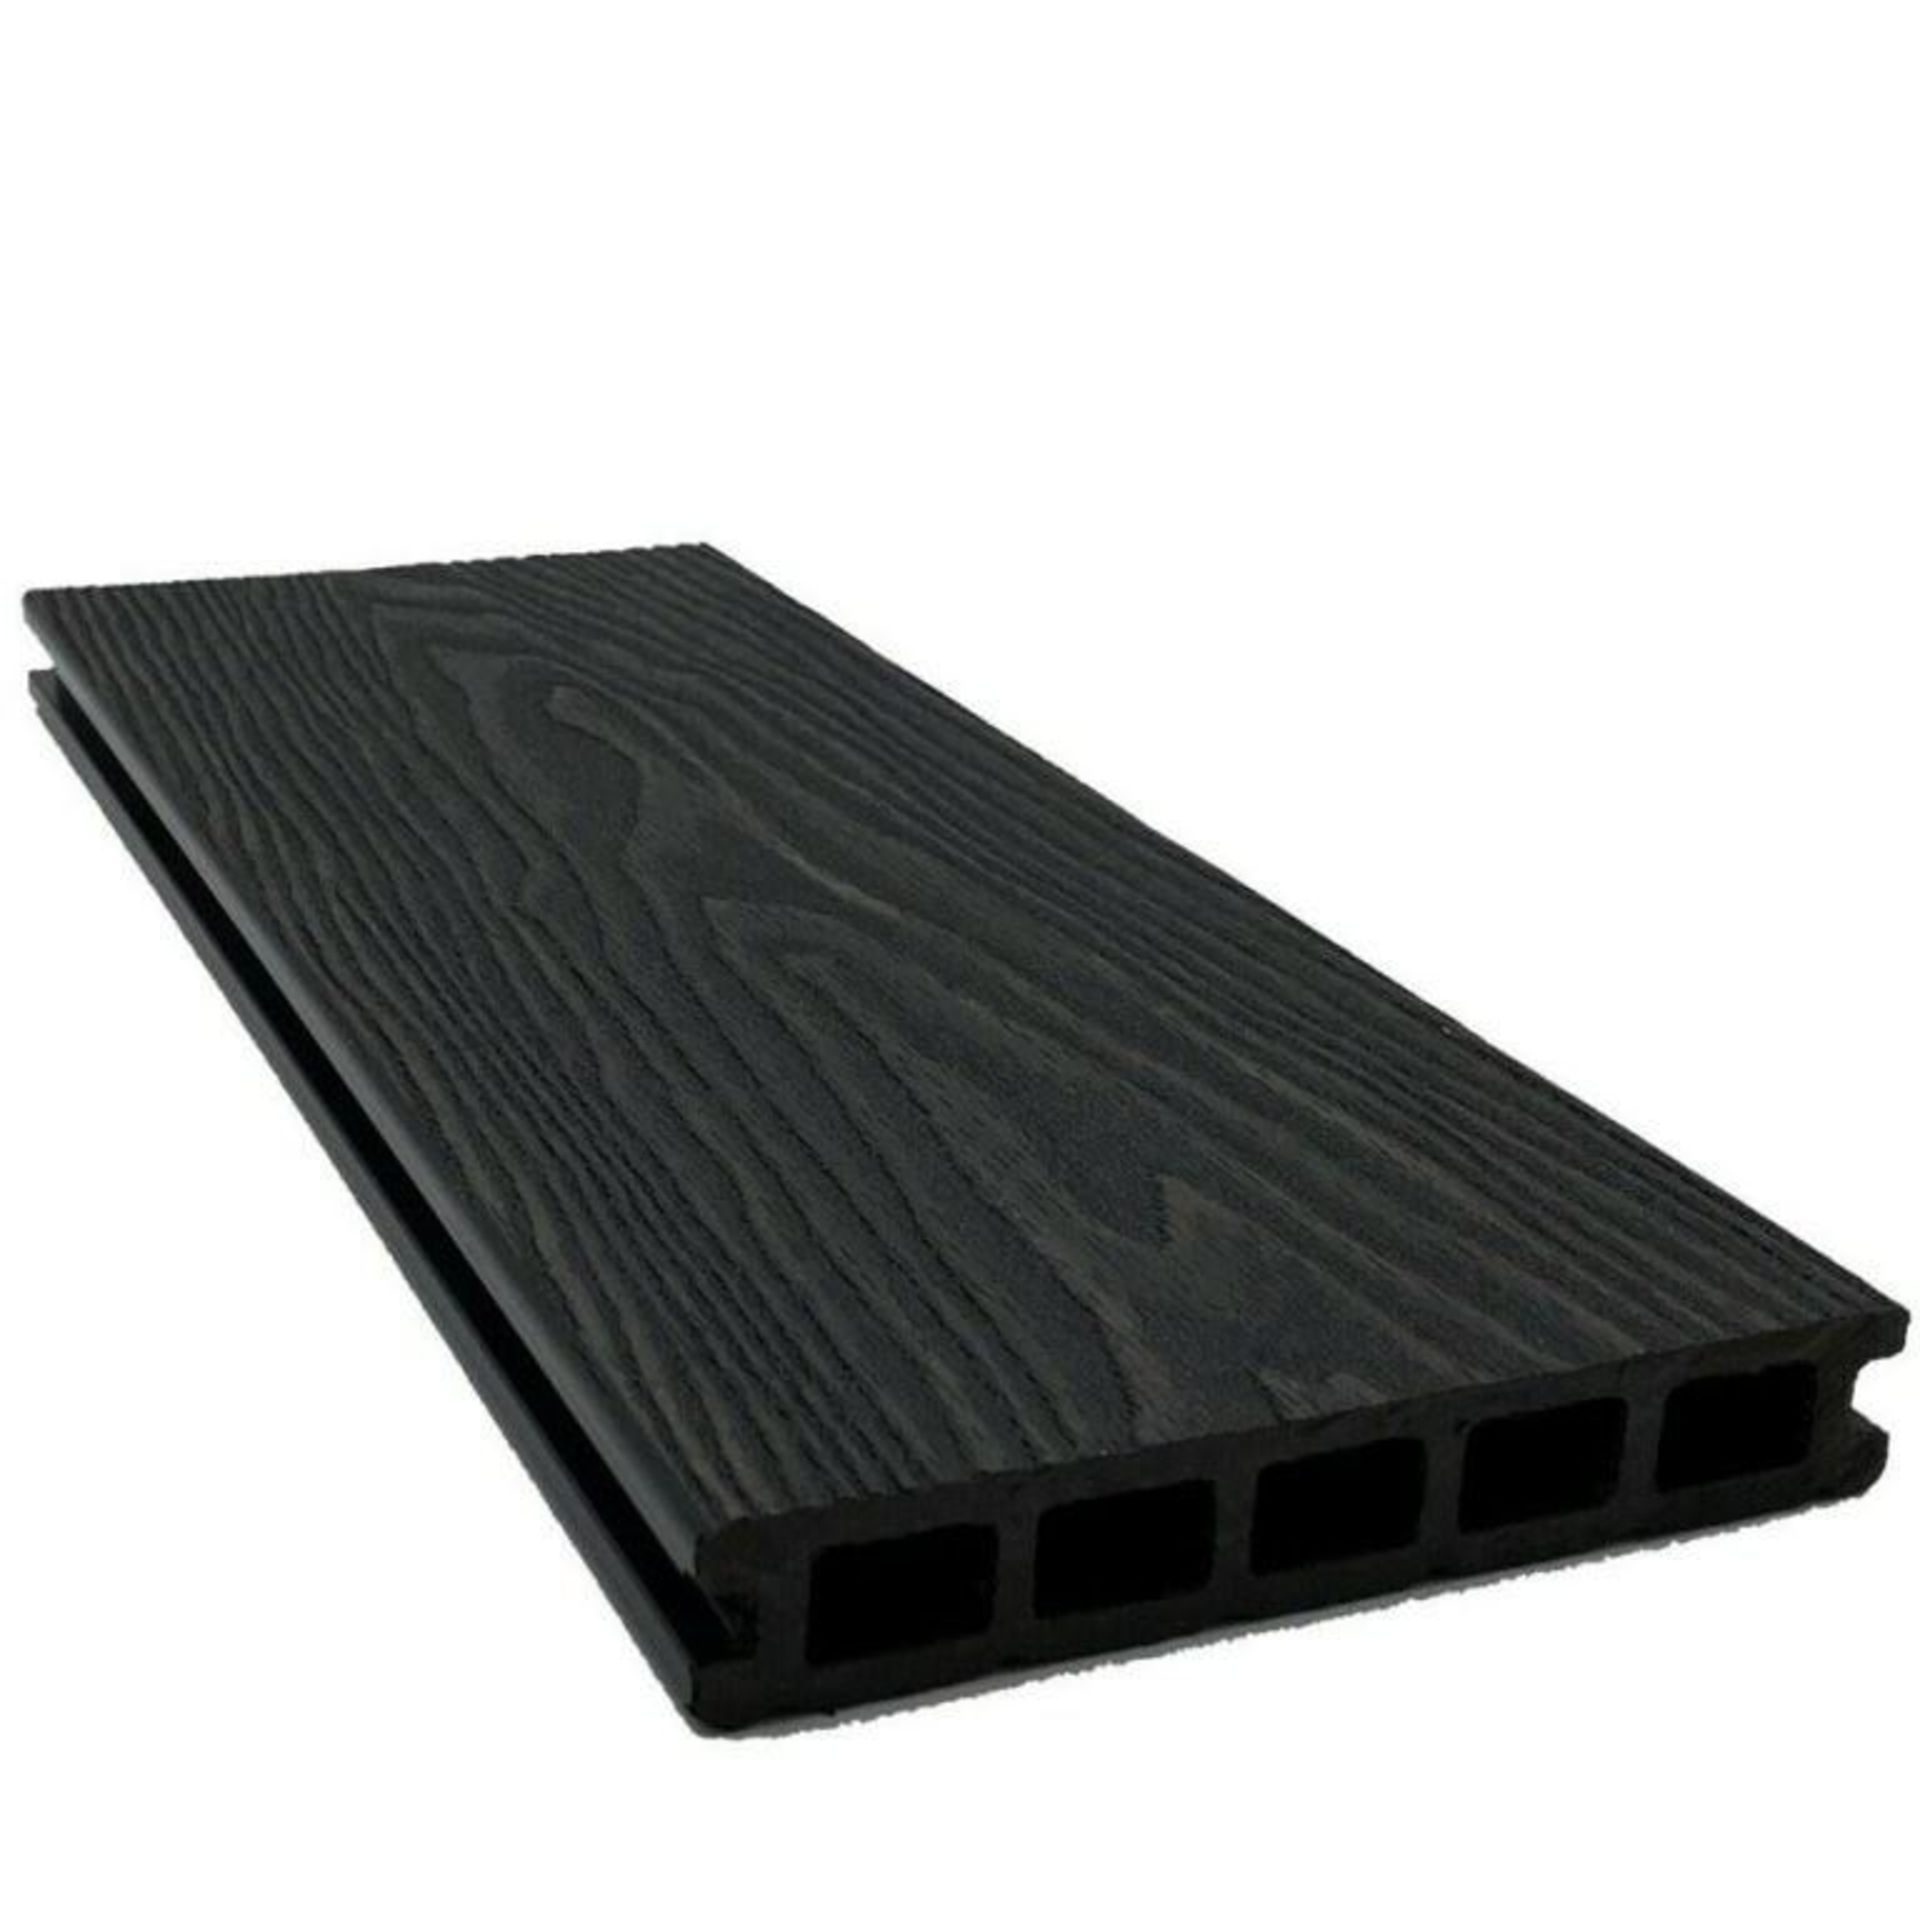 20x Composite Decking boards colour Cylon Ebony